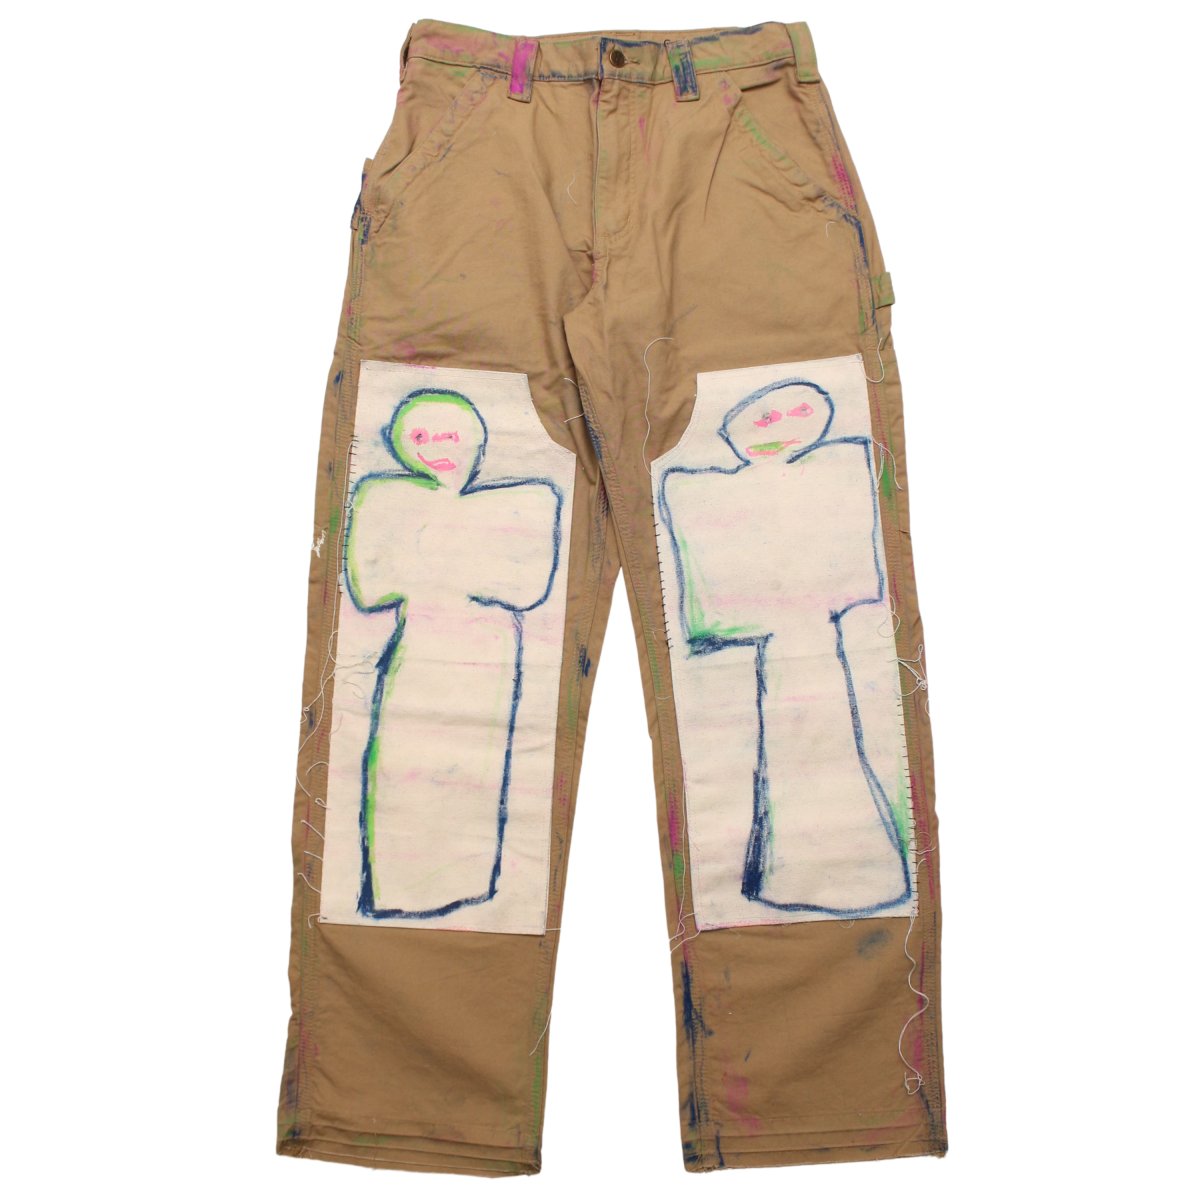 one of one custom pants